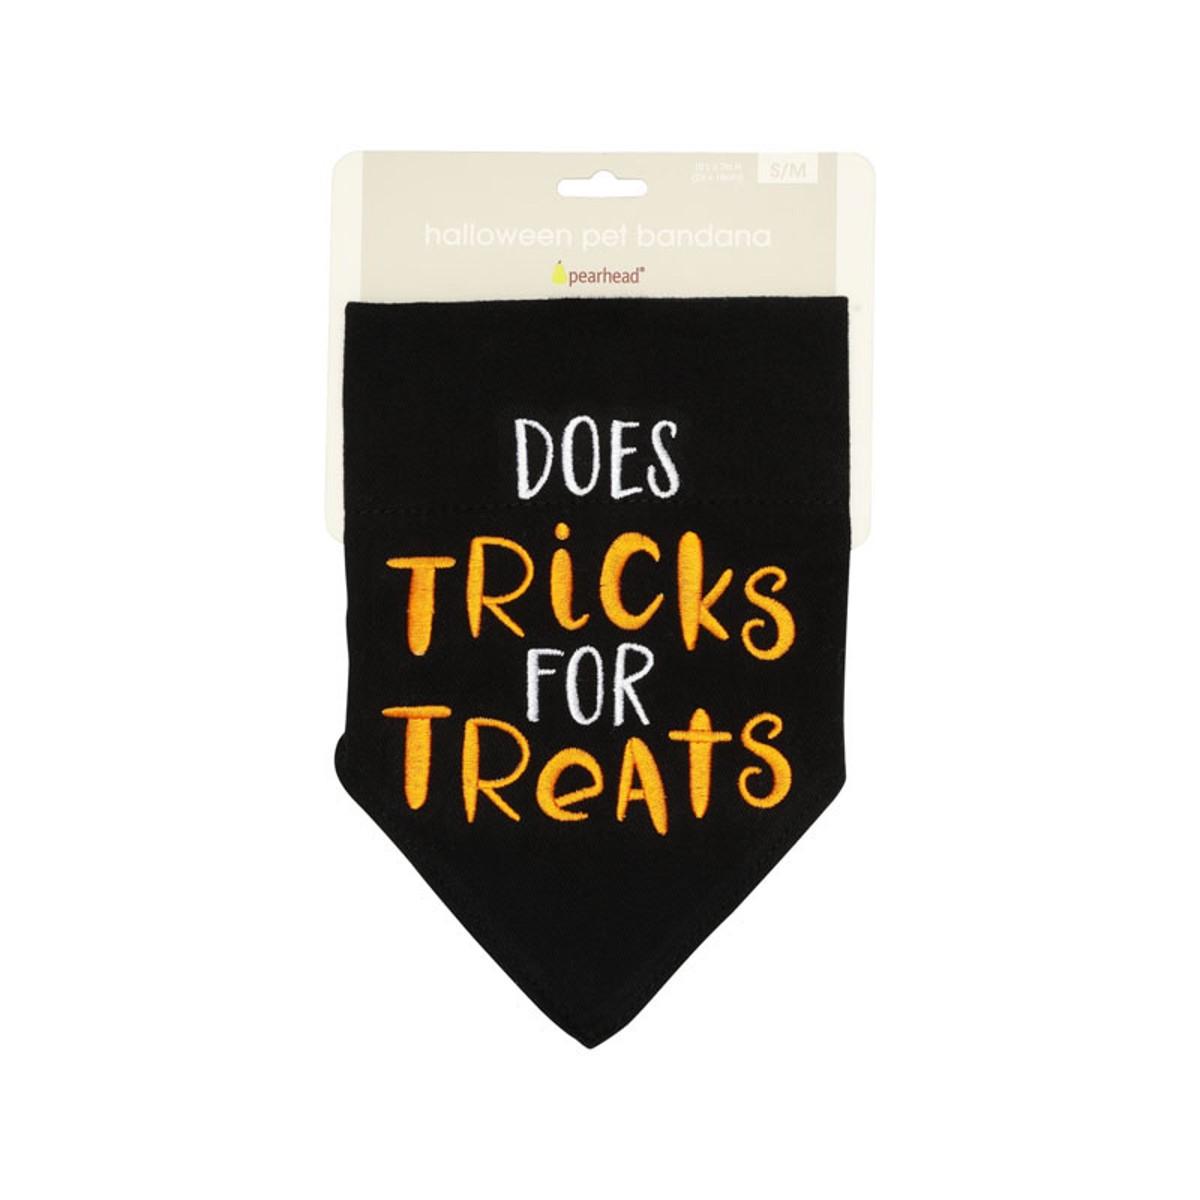 Pearhead Halloween Dog Bandana - Tricks